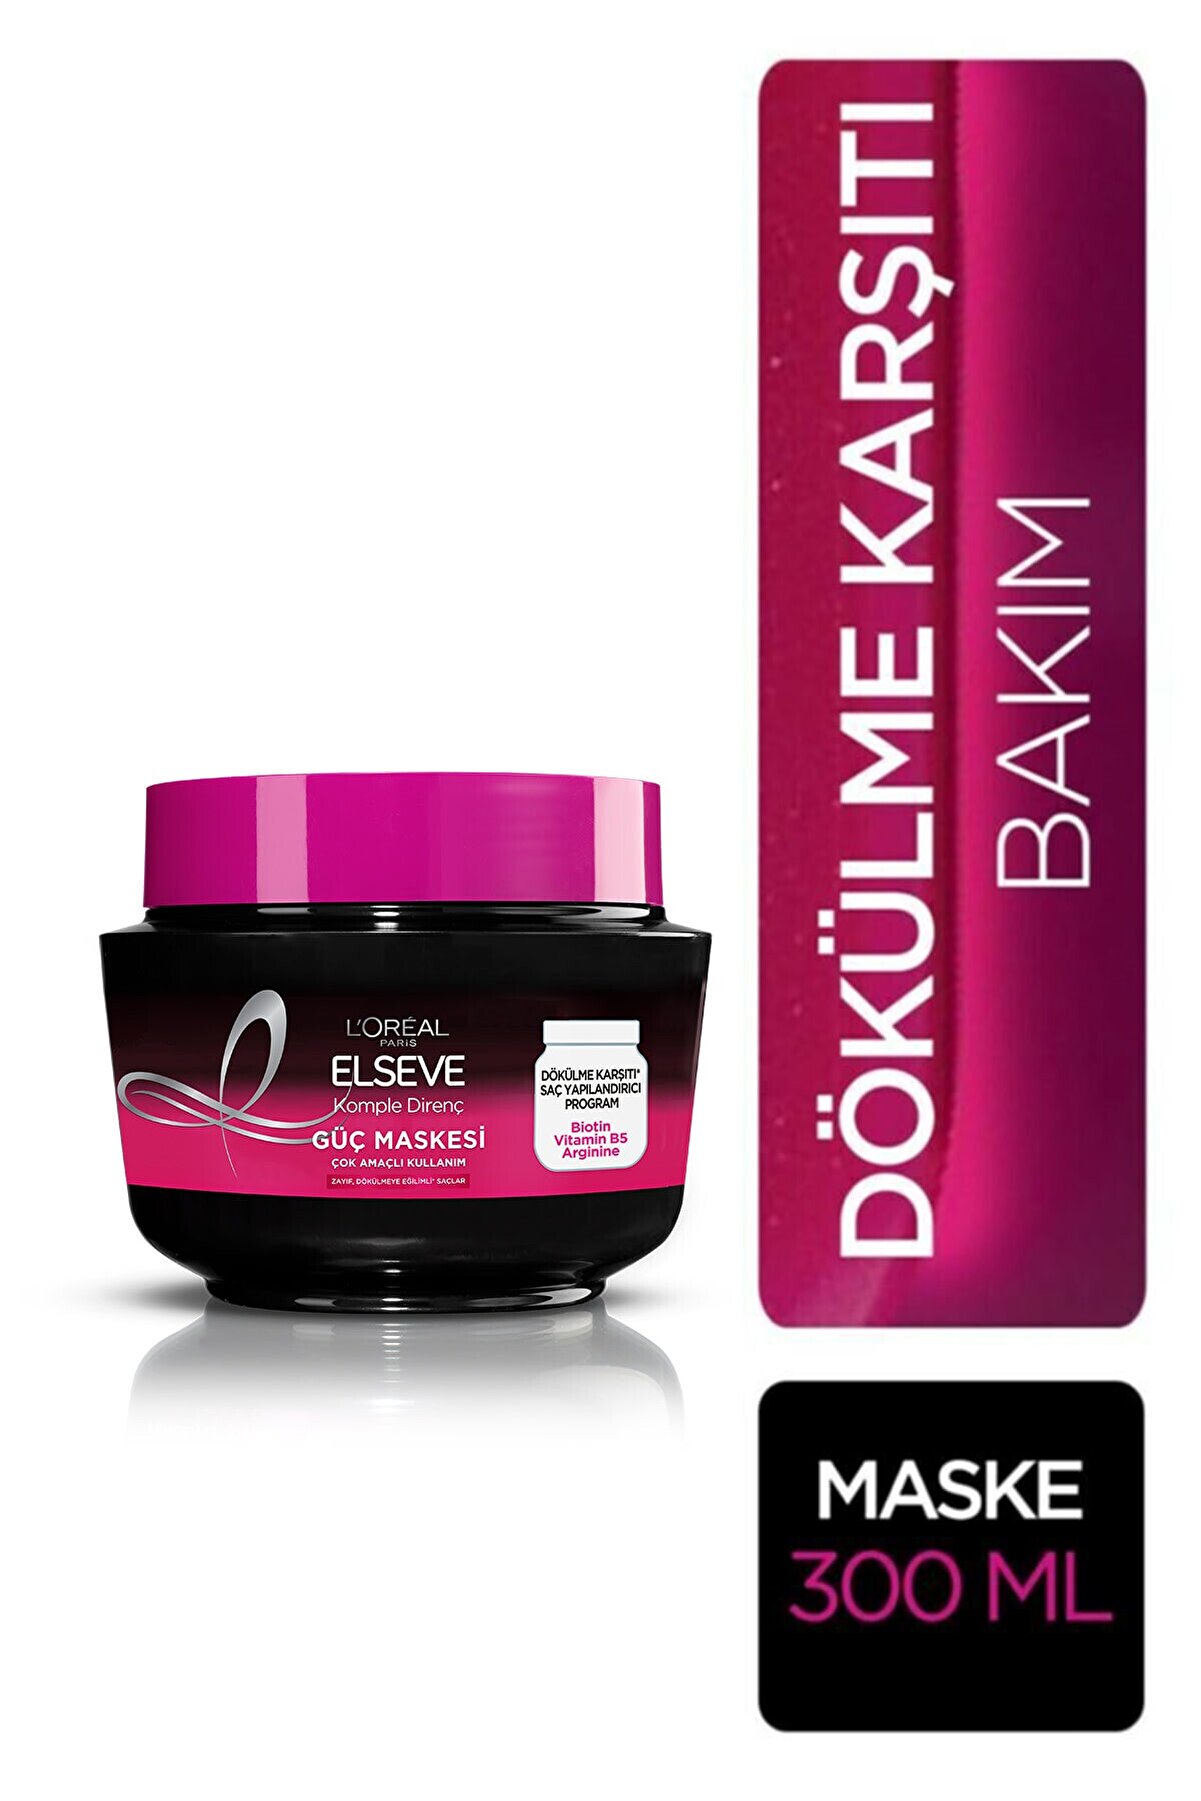 Elseve L'oréal Paris Komple Direnç Dökülme Karşıtı Güç Maskesi 300 ml